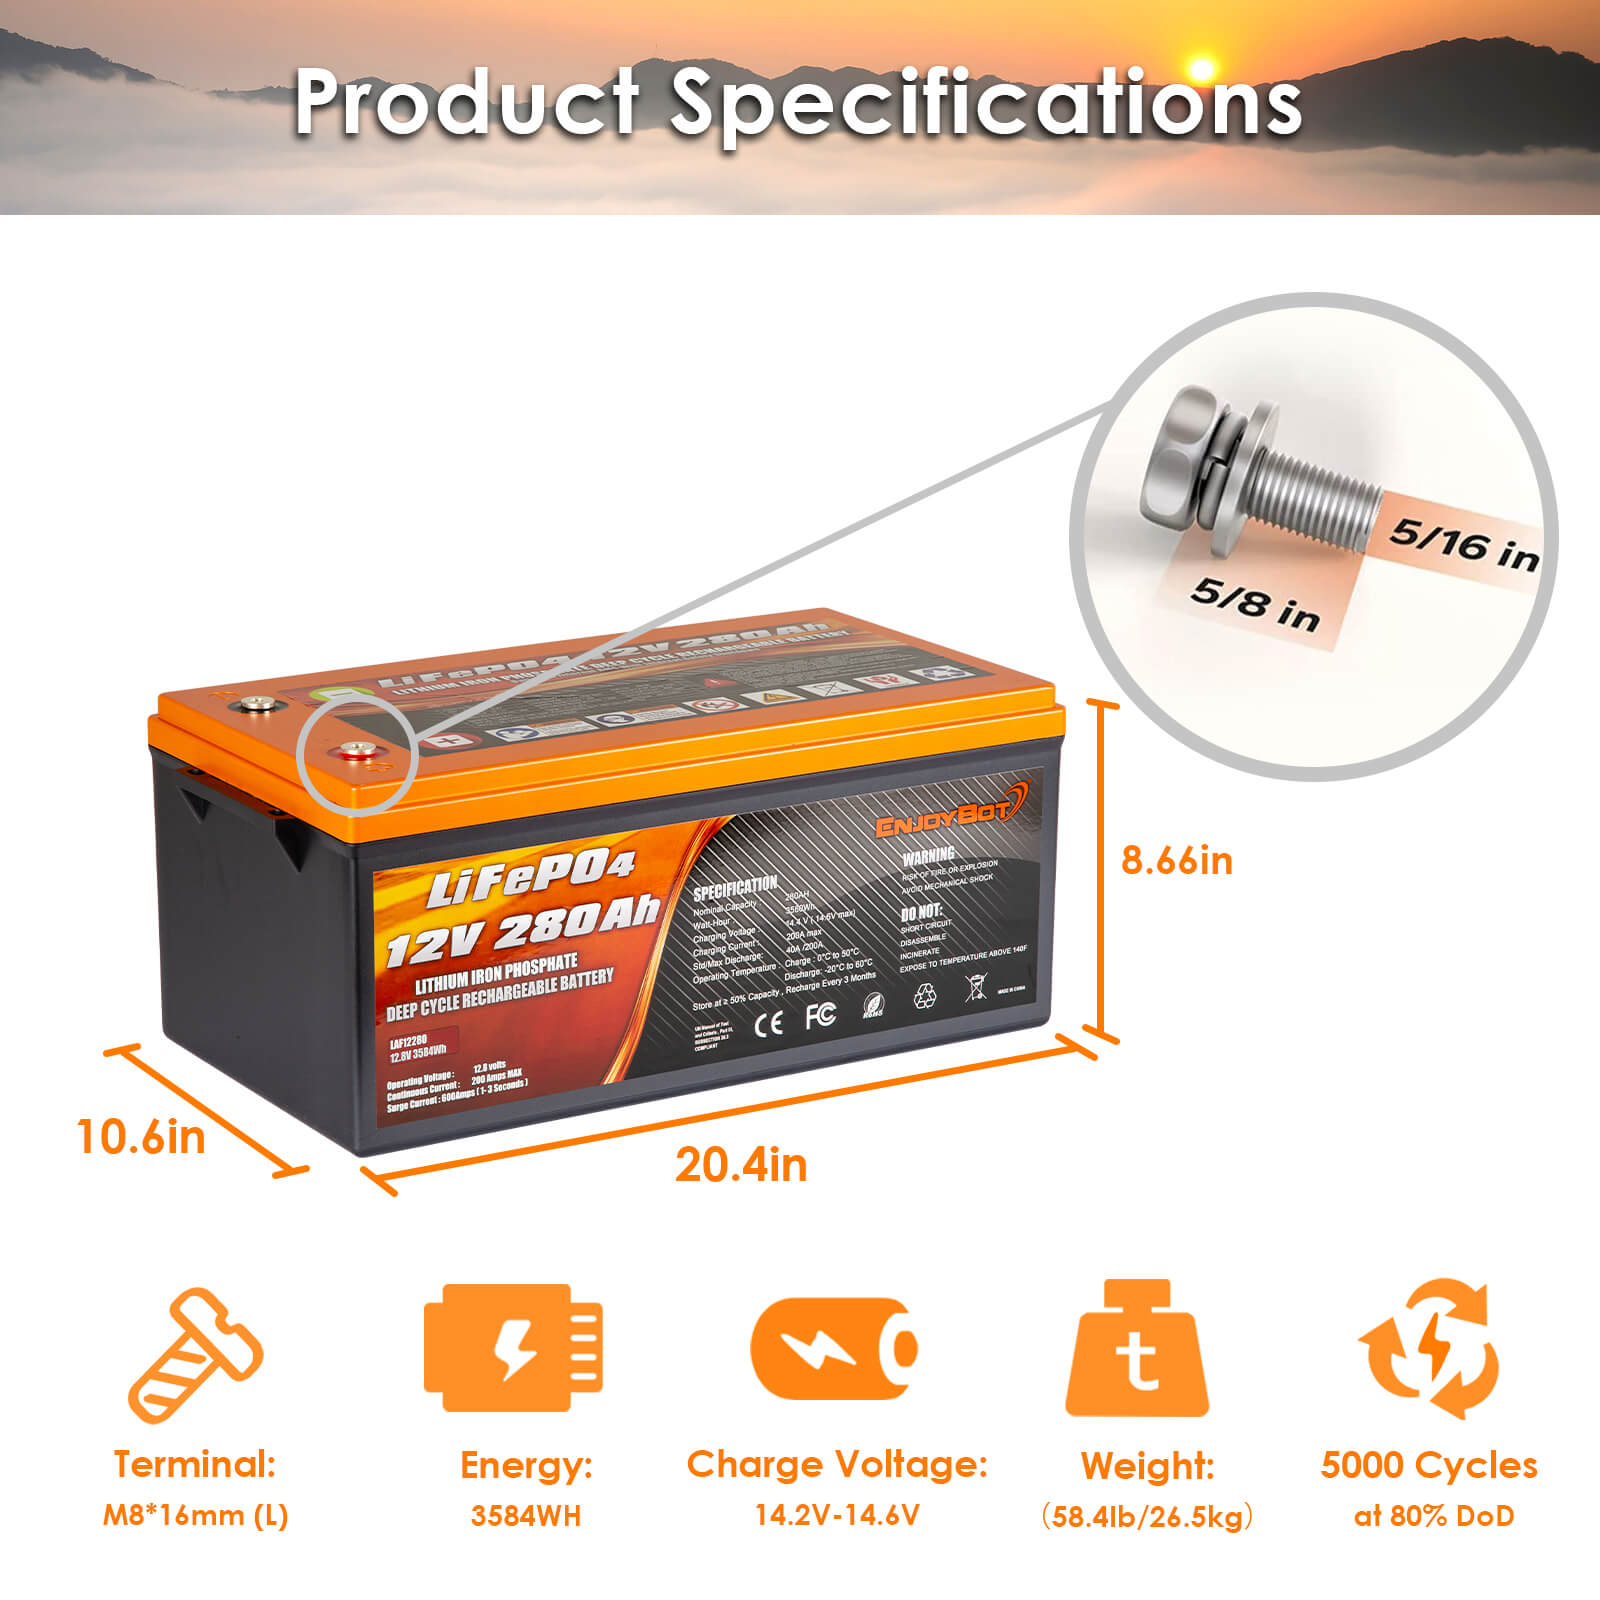 Enjoybot 12v 280ah LiFePO4 Battery - Product Specification